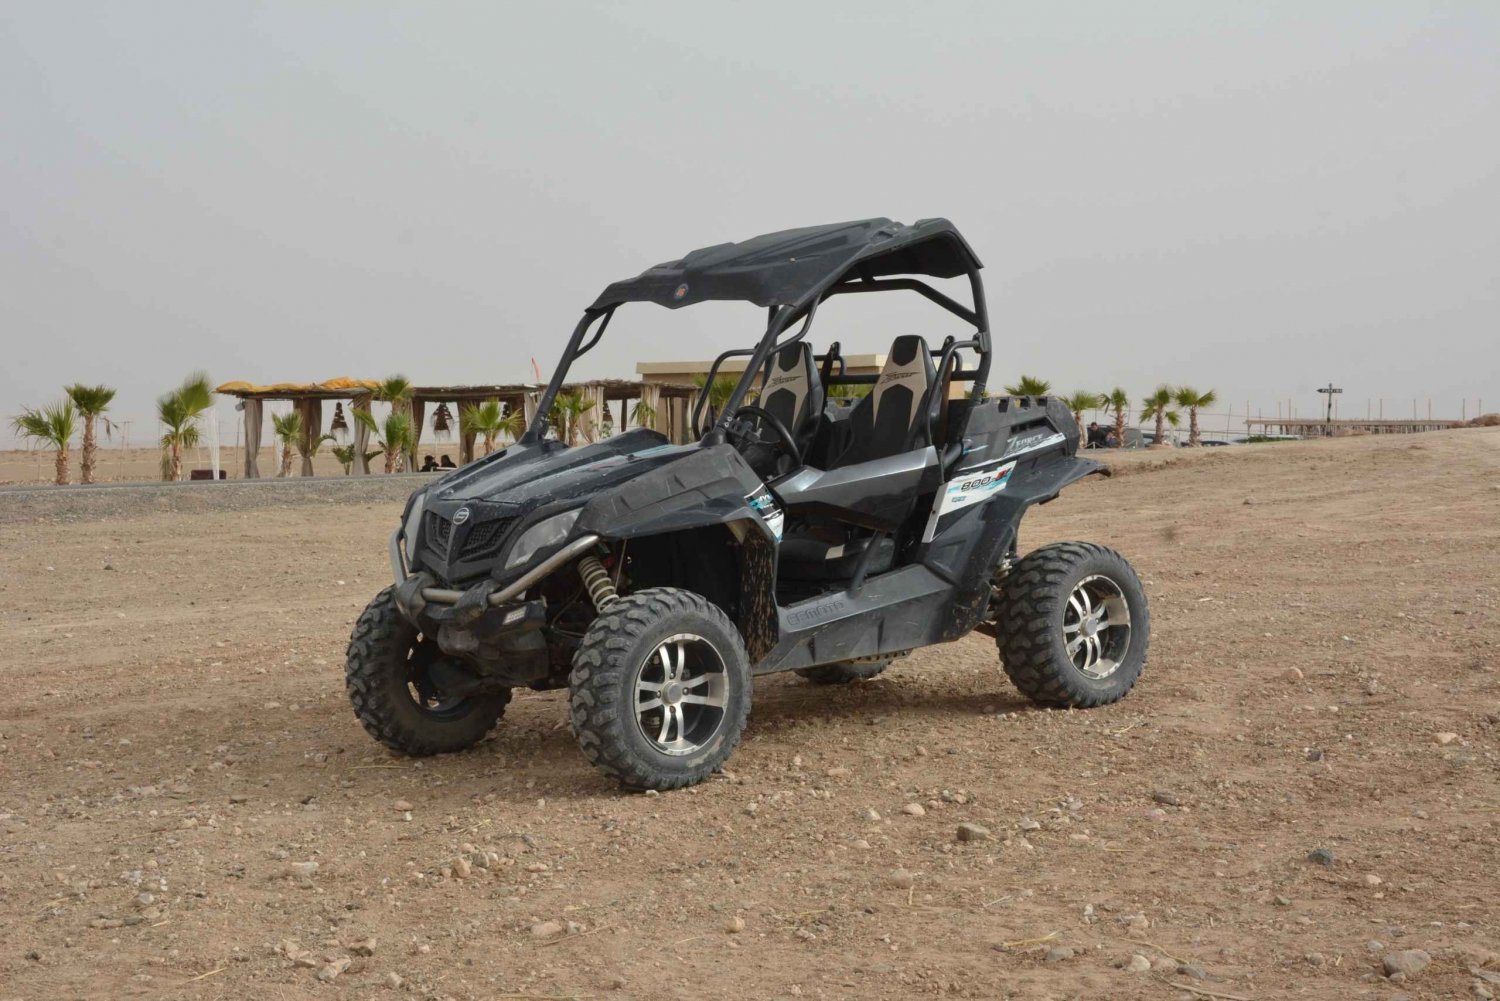 Marrakech Buggy 1000cc excursion in Agafay desert and tea